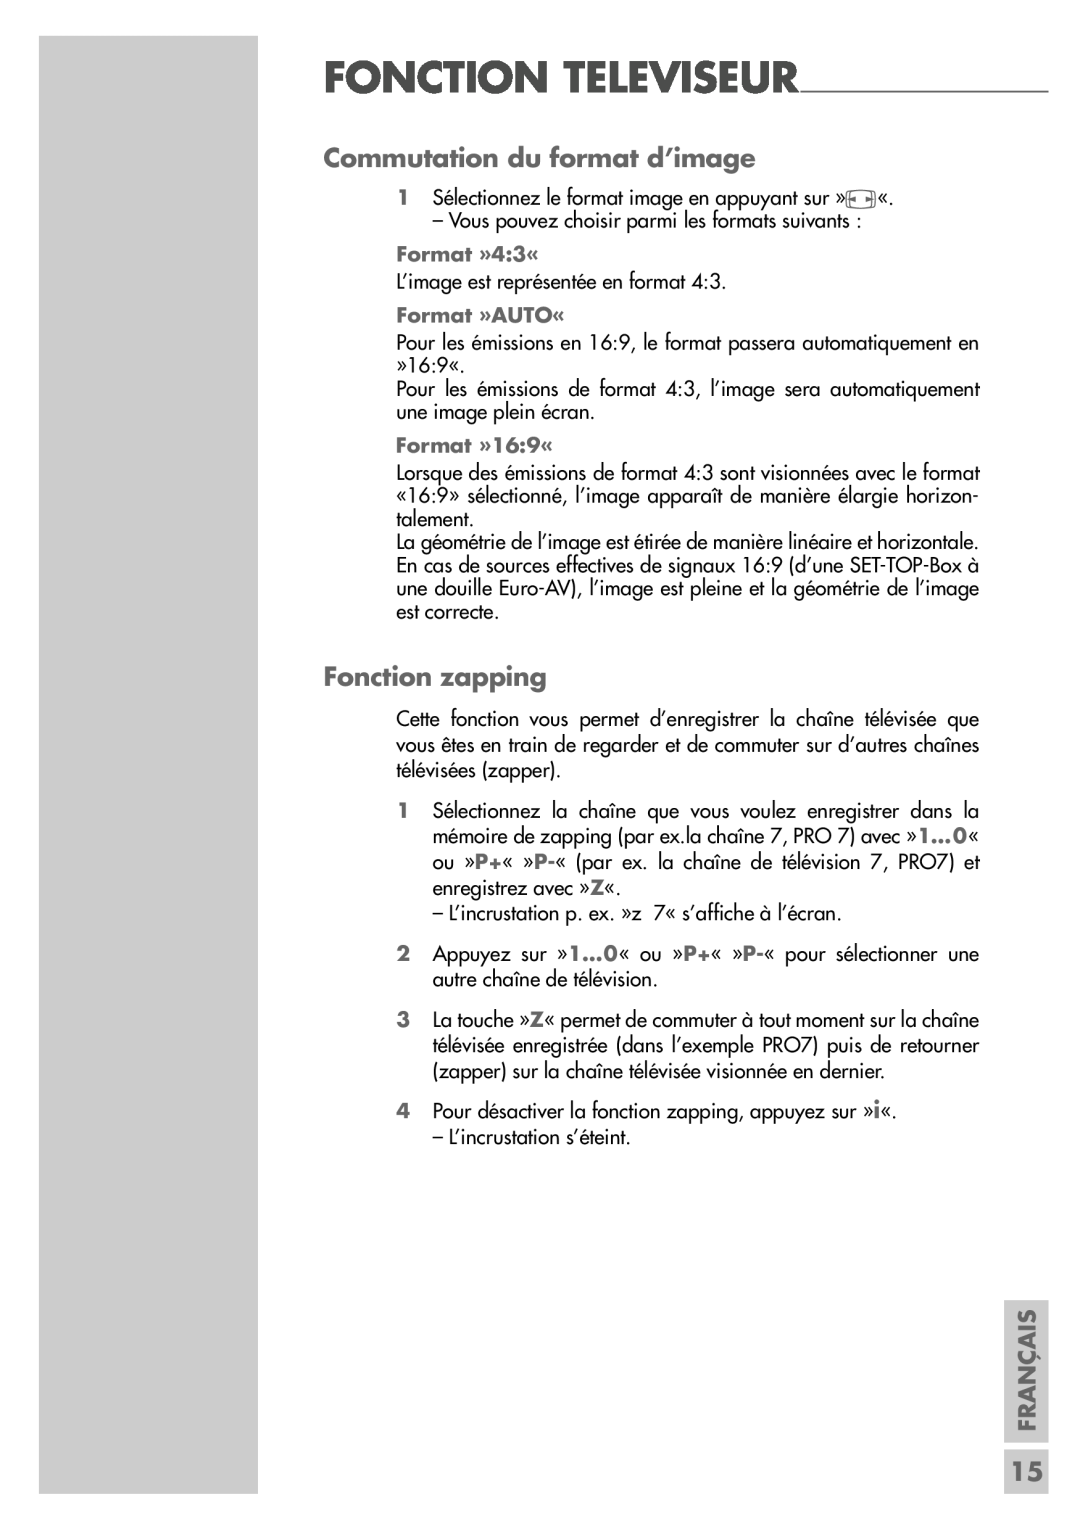 Grundig LW49-7710BS manual Commutation du format d’image, Fonction zapping, Français 